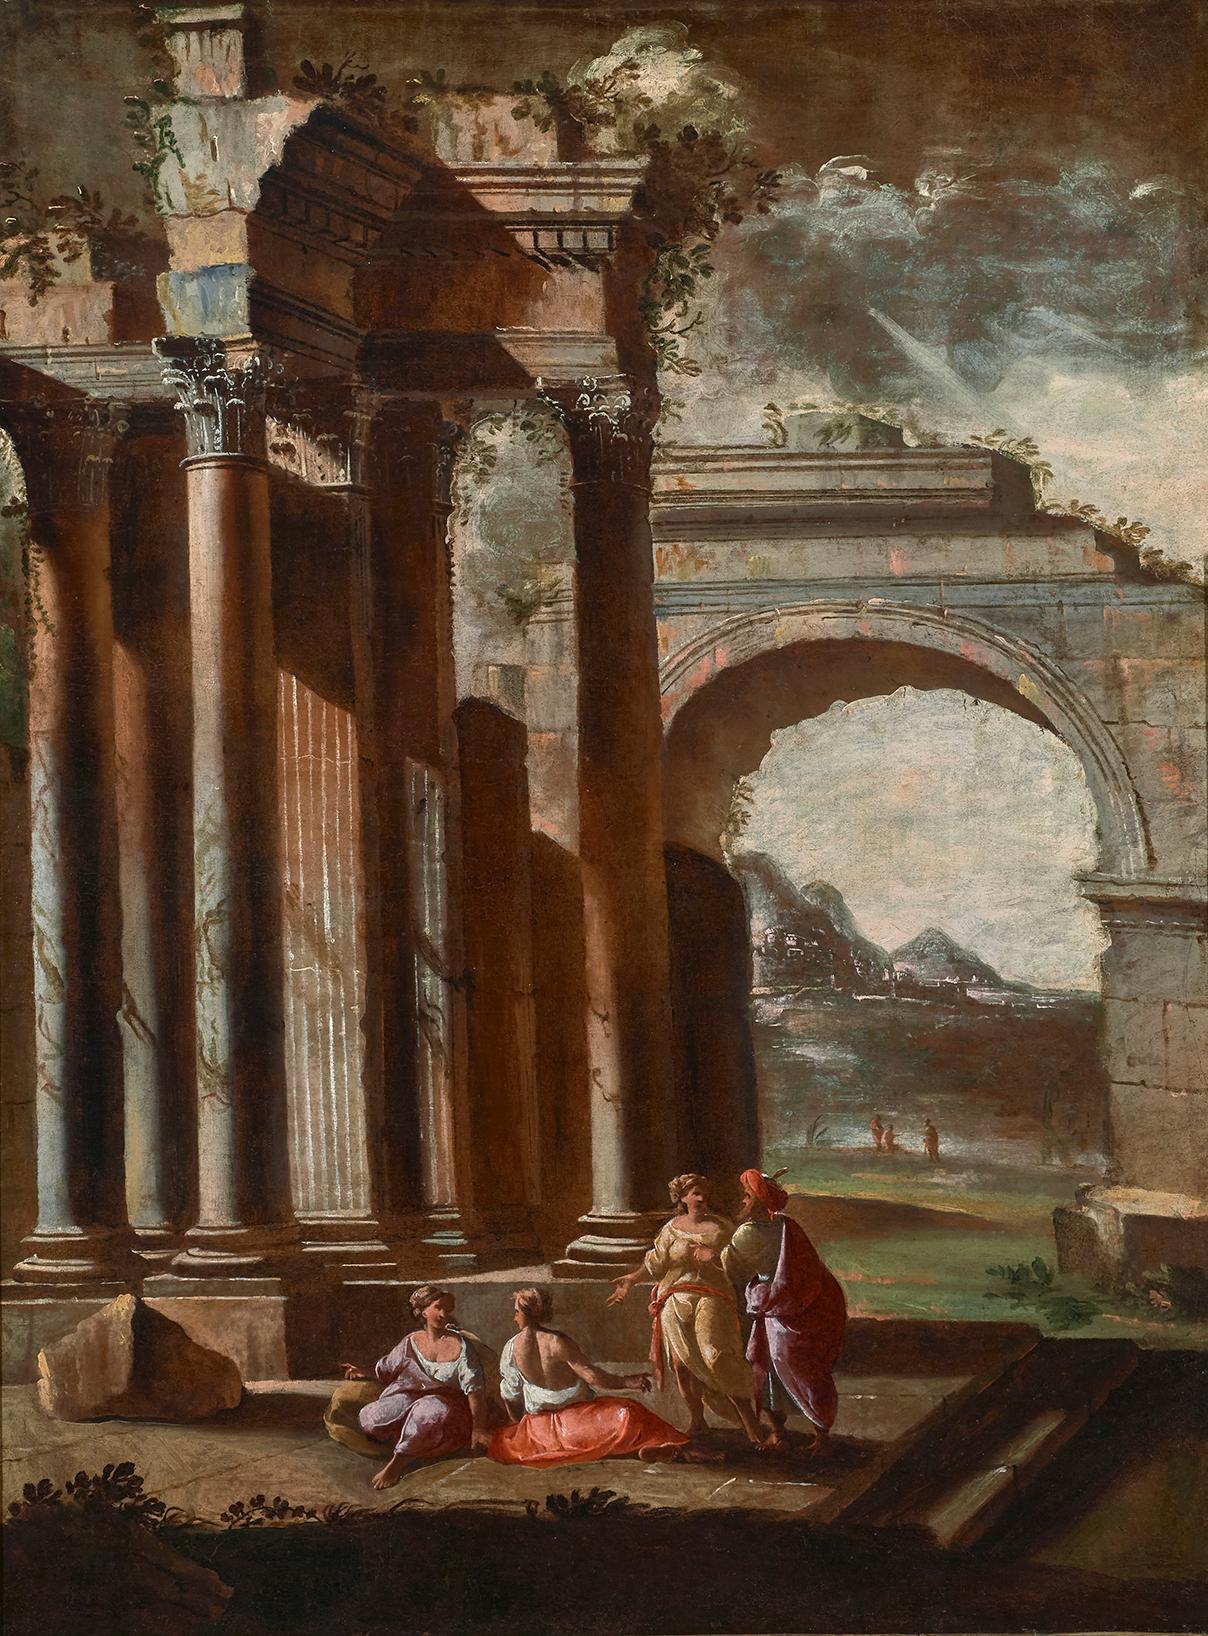 18th Century and Earlier Capriccio, Carlieri 18th Century Oil on Canvas Architectural Capriccio Painting